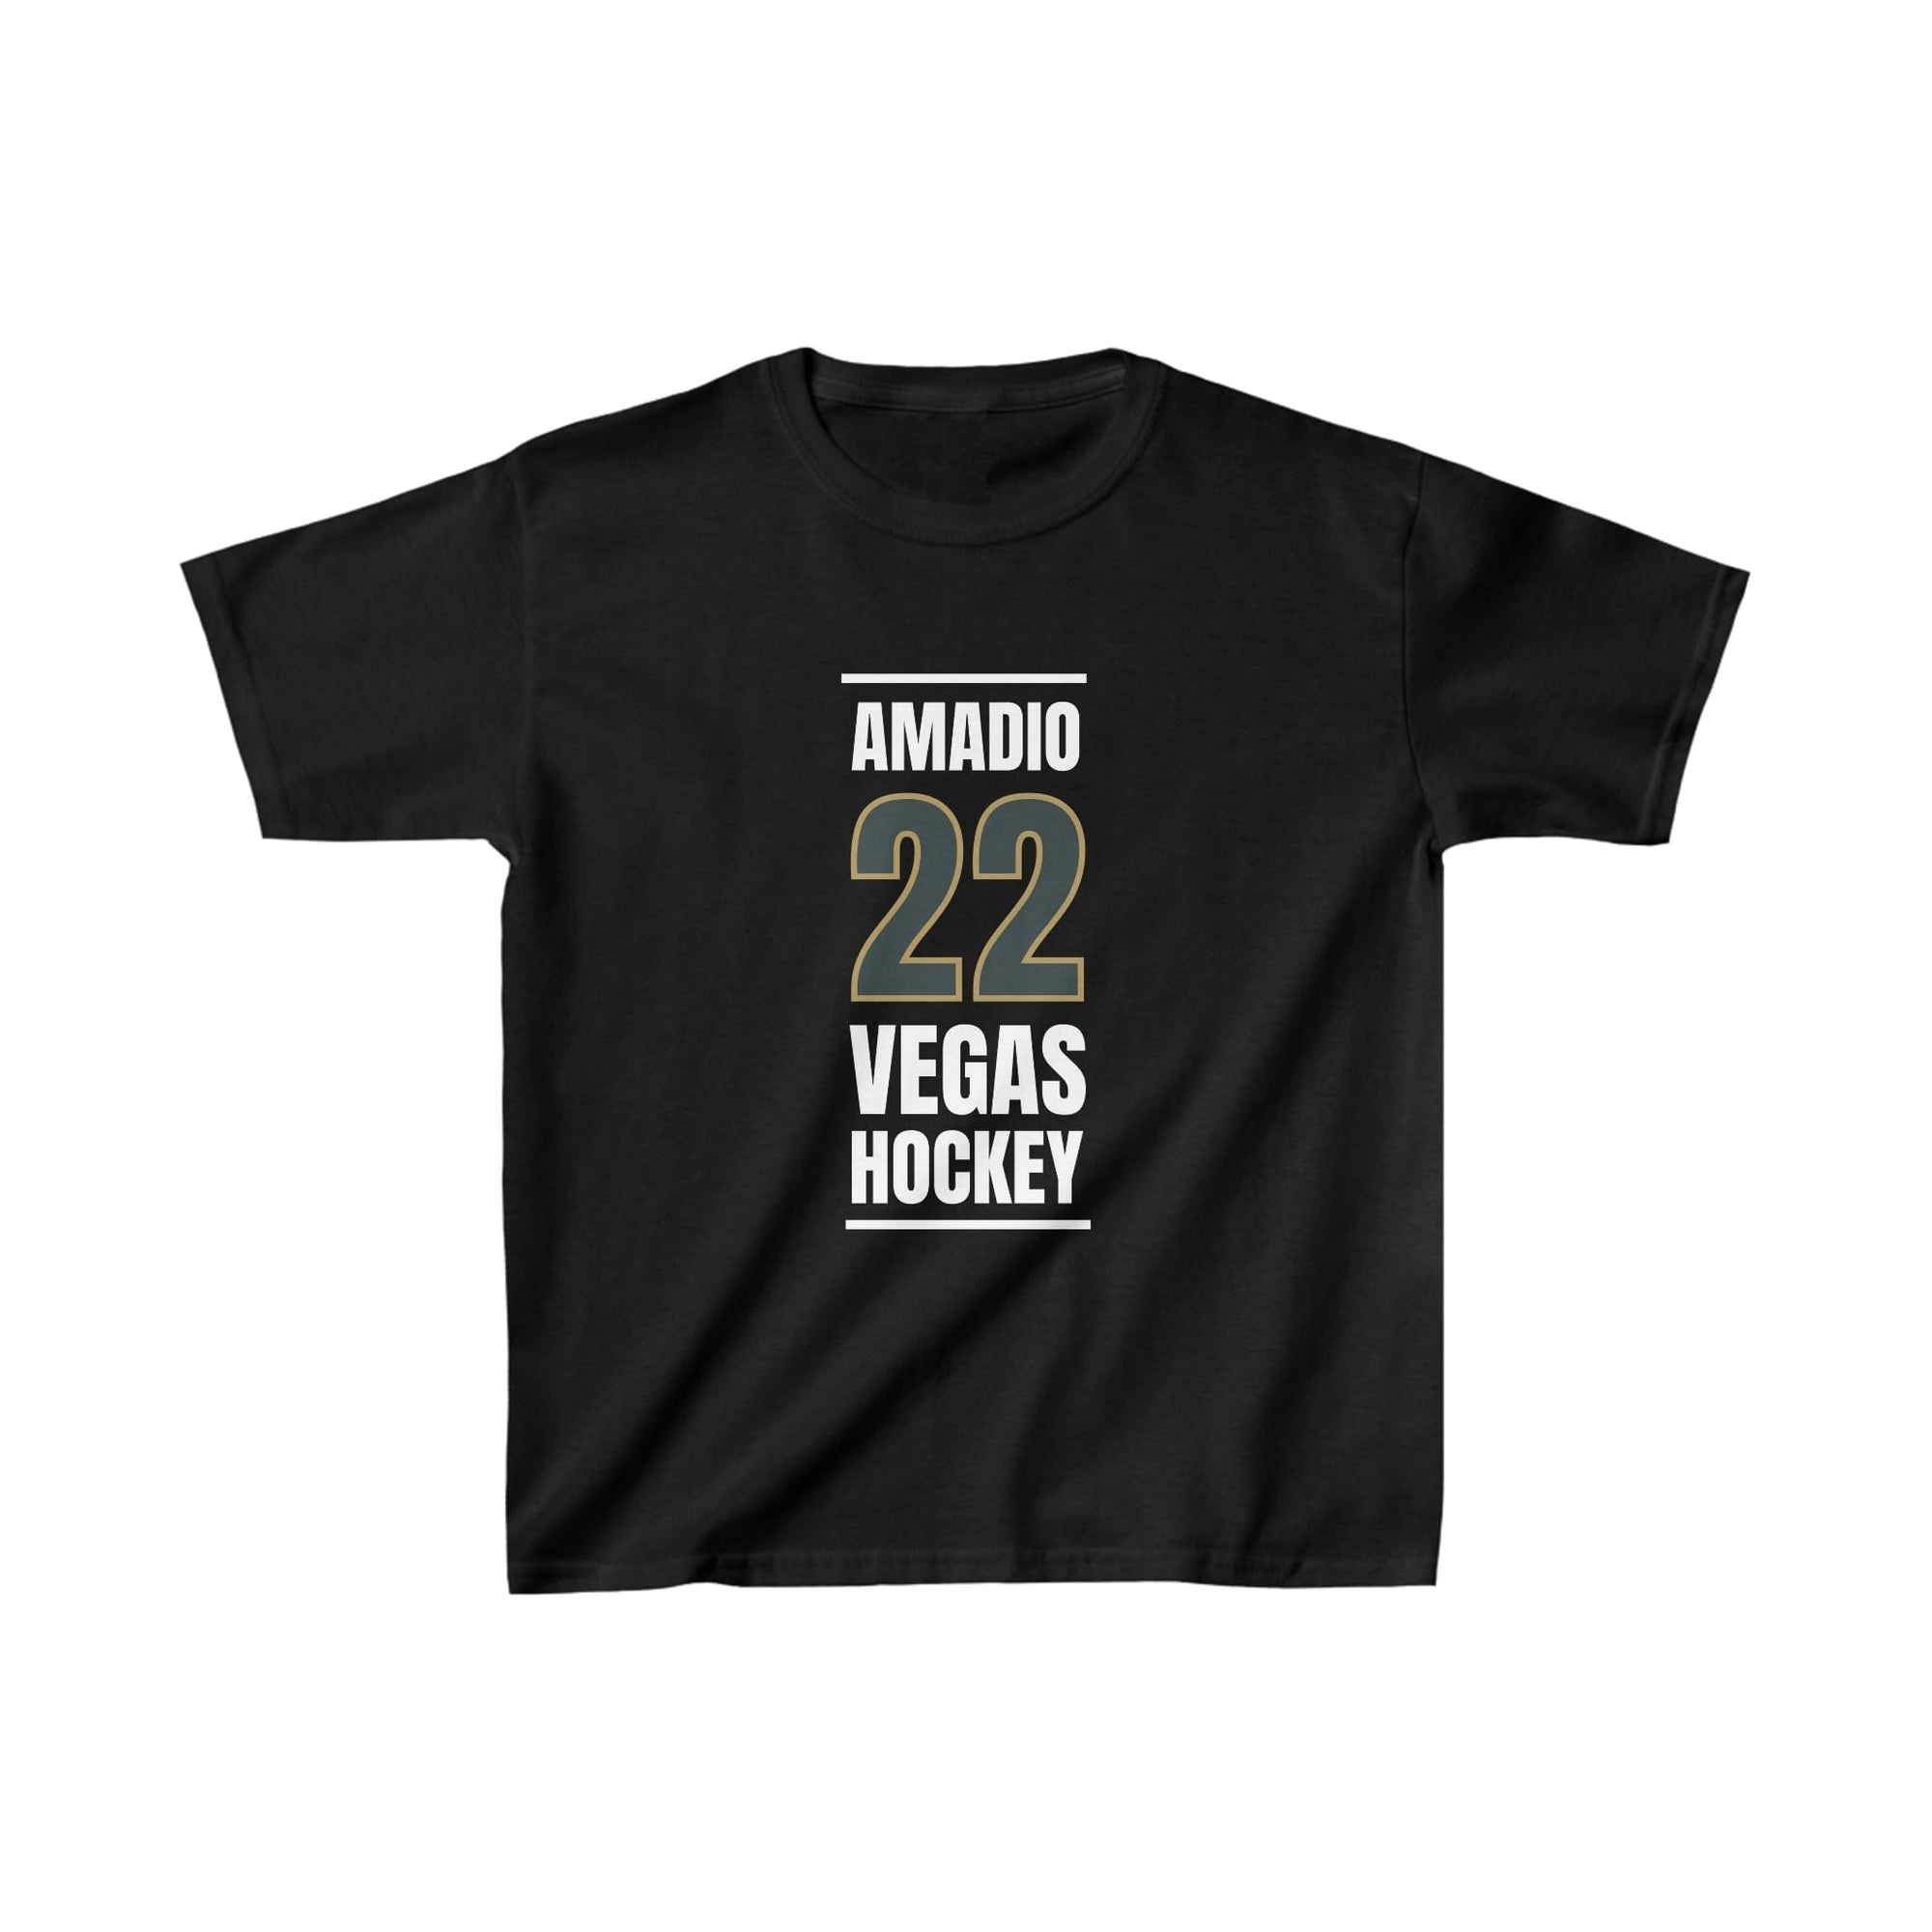 Kids clothes Amadio 22 Vegas Hockey Steel Gray Vertical Design Kids Tee